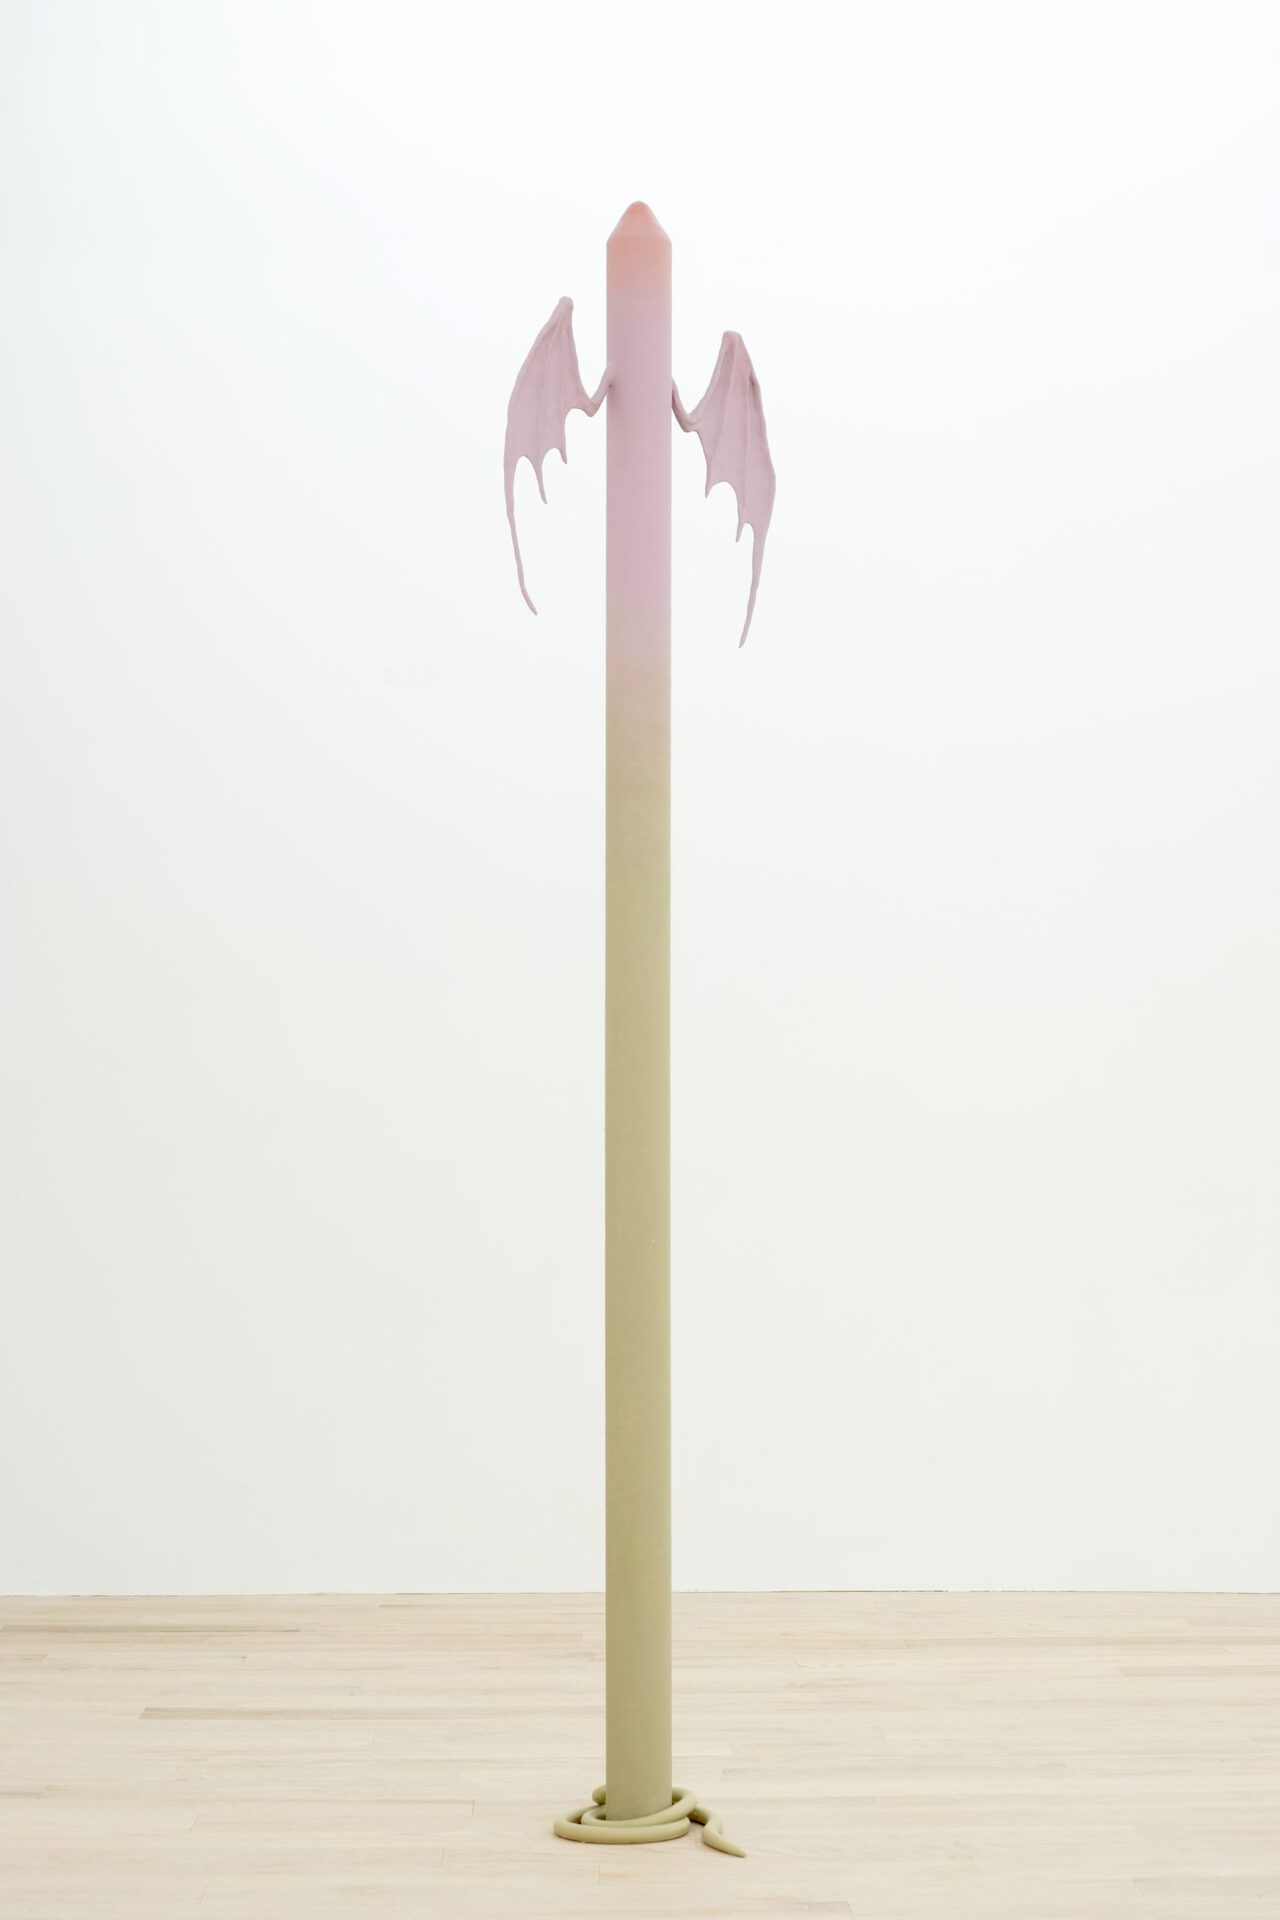 Kian McKeown, Blushing Bat, 2021, cardboard tube, epoxy clay, paint, 74 1/2 x 11 15/16 in